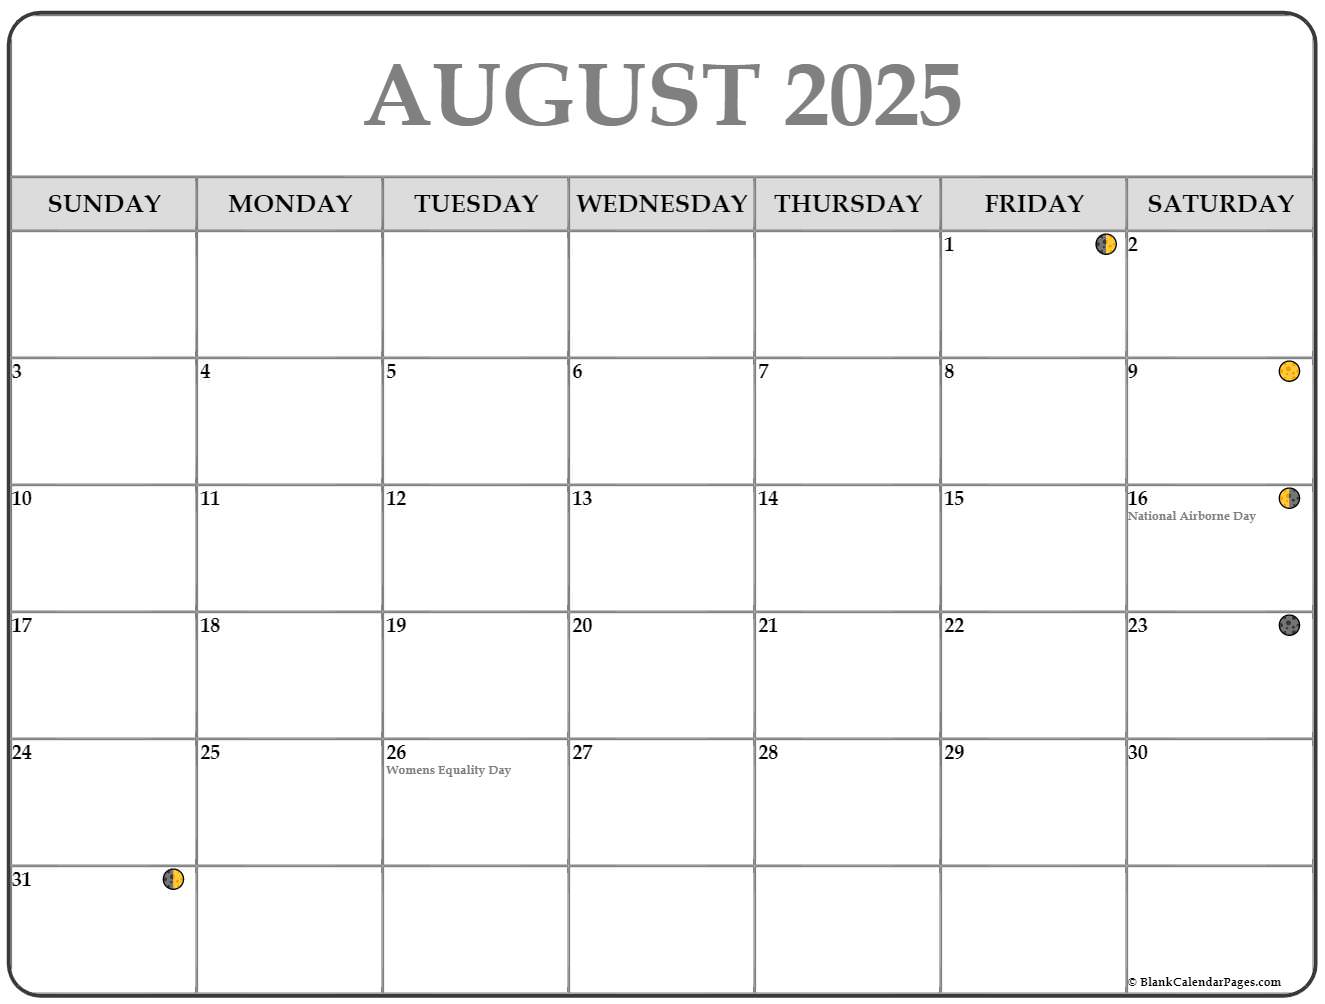 august-2025-lunar-calendar-moon-phase-calendar